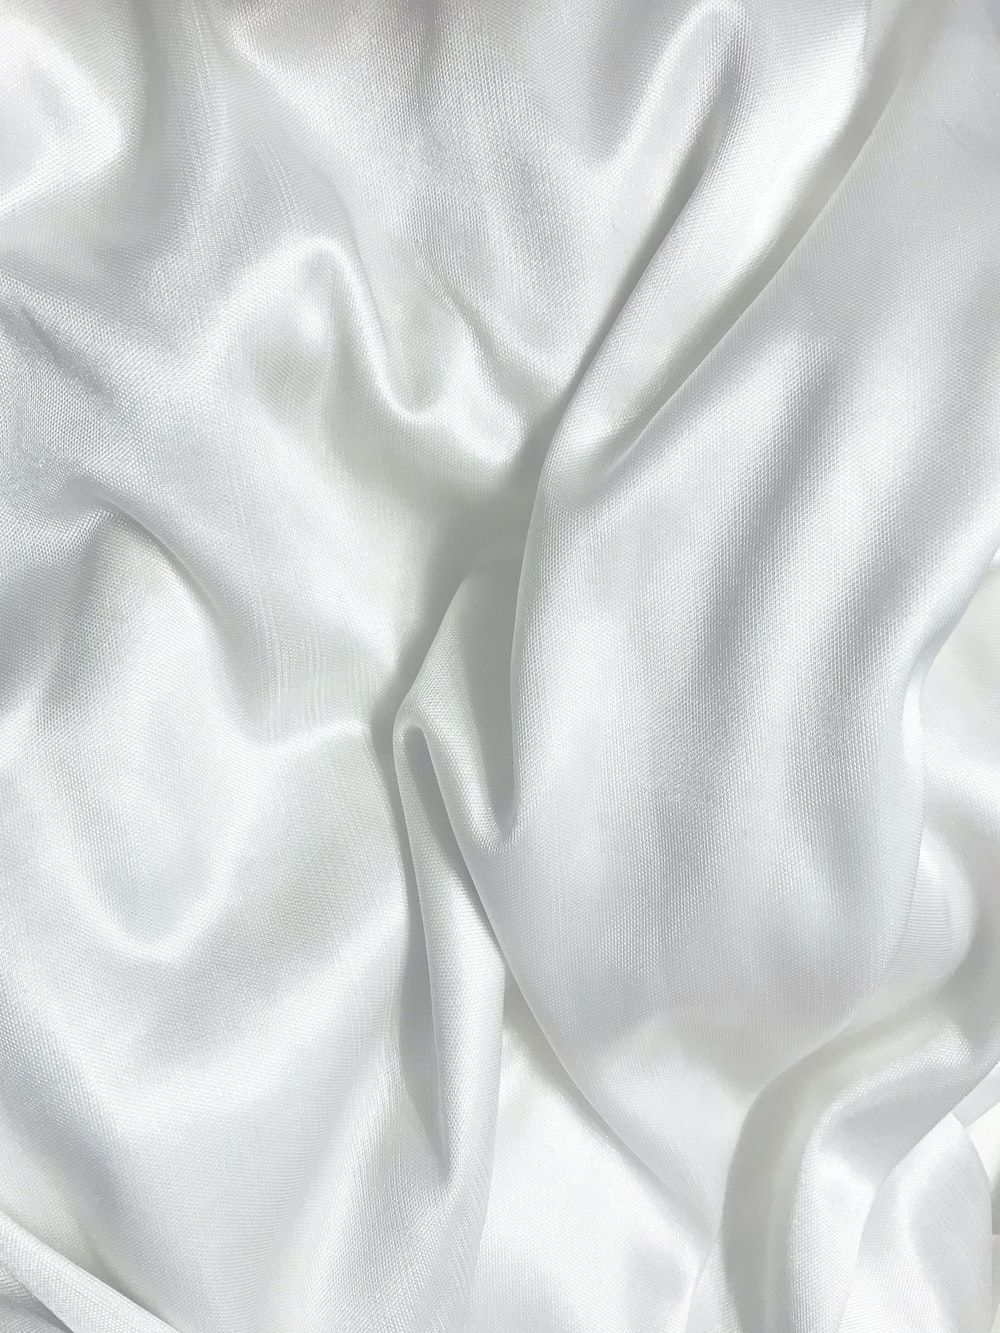 White Silk Picture. Download Free Image